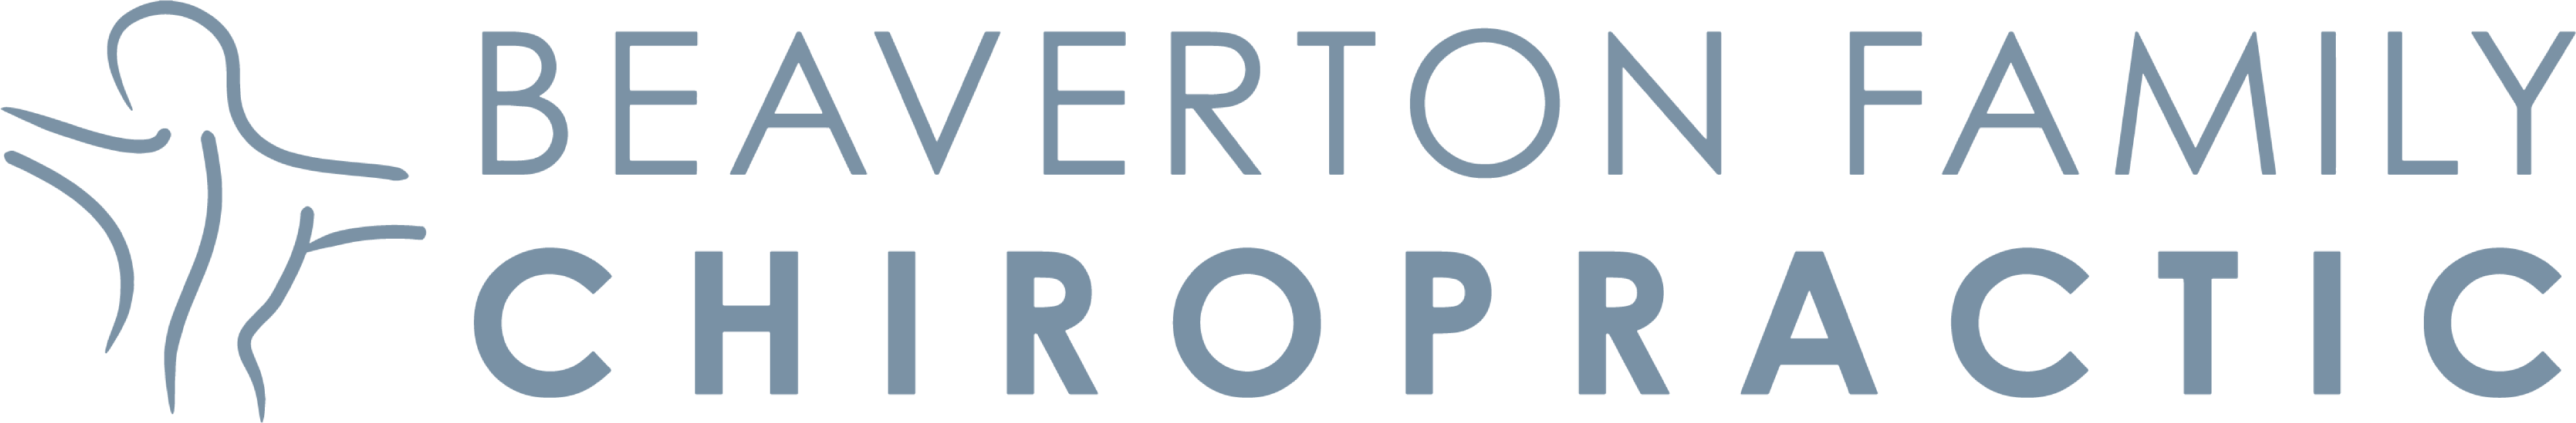 Beaverton Family Chiropractic logo